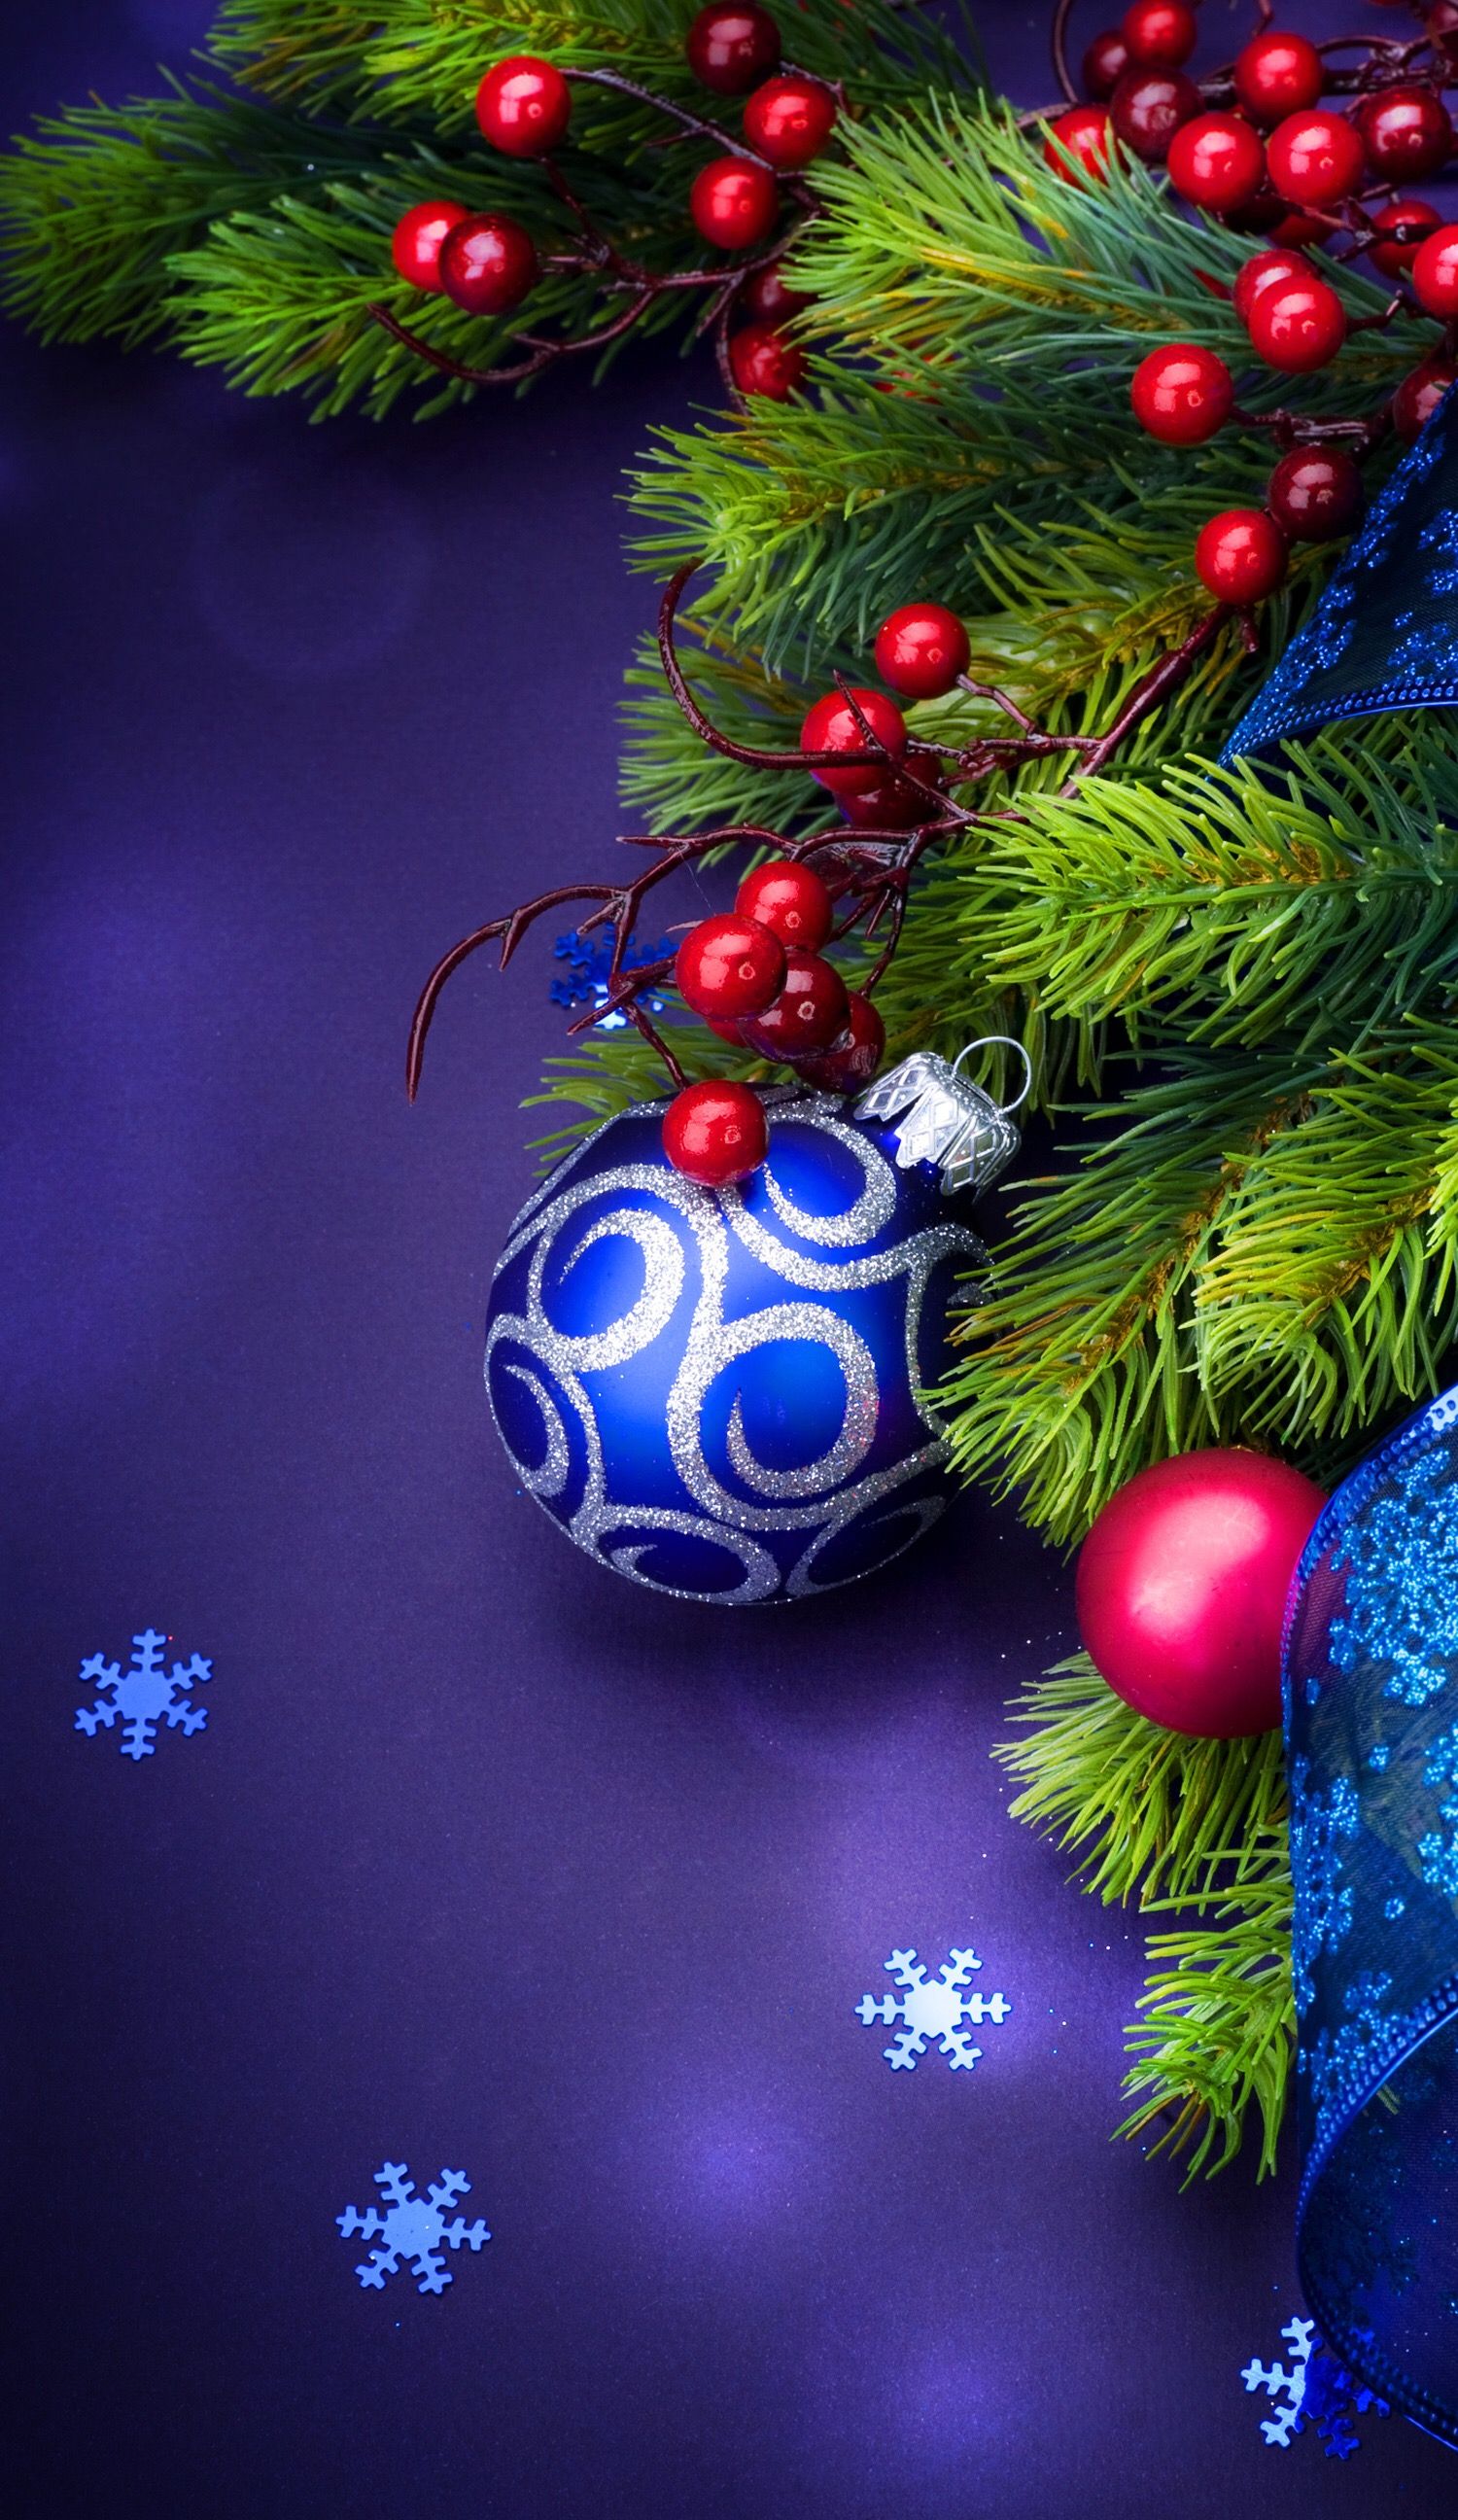 navidad live wallpaper,árbol de navidad,decoración navideña,decoración navideña,árbol,abeto